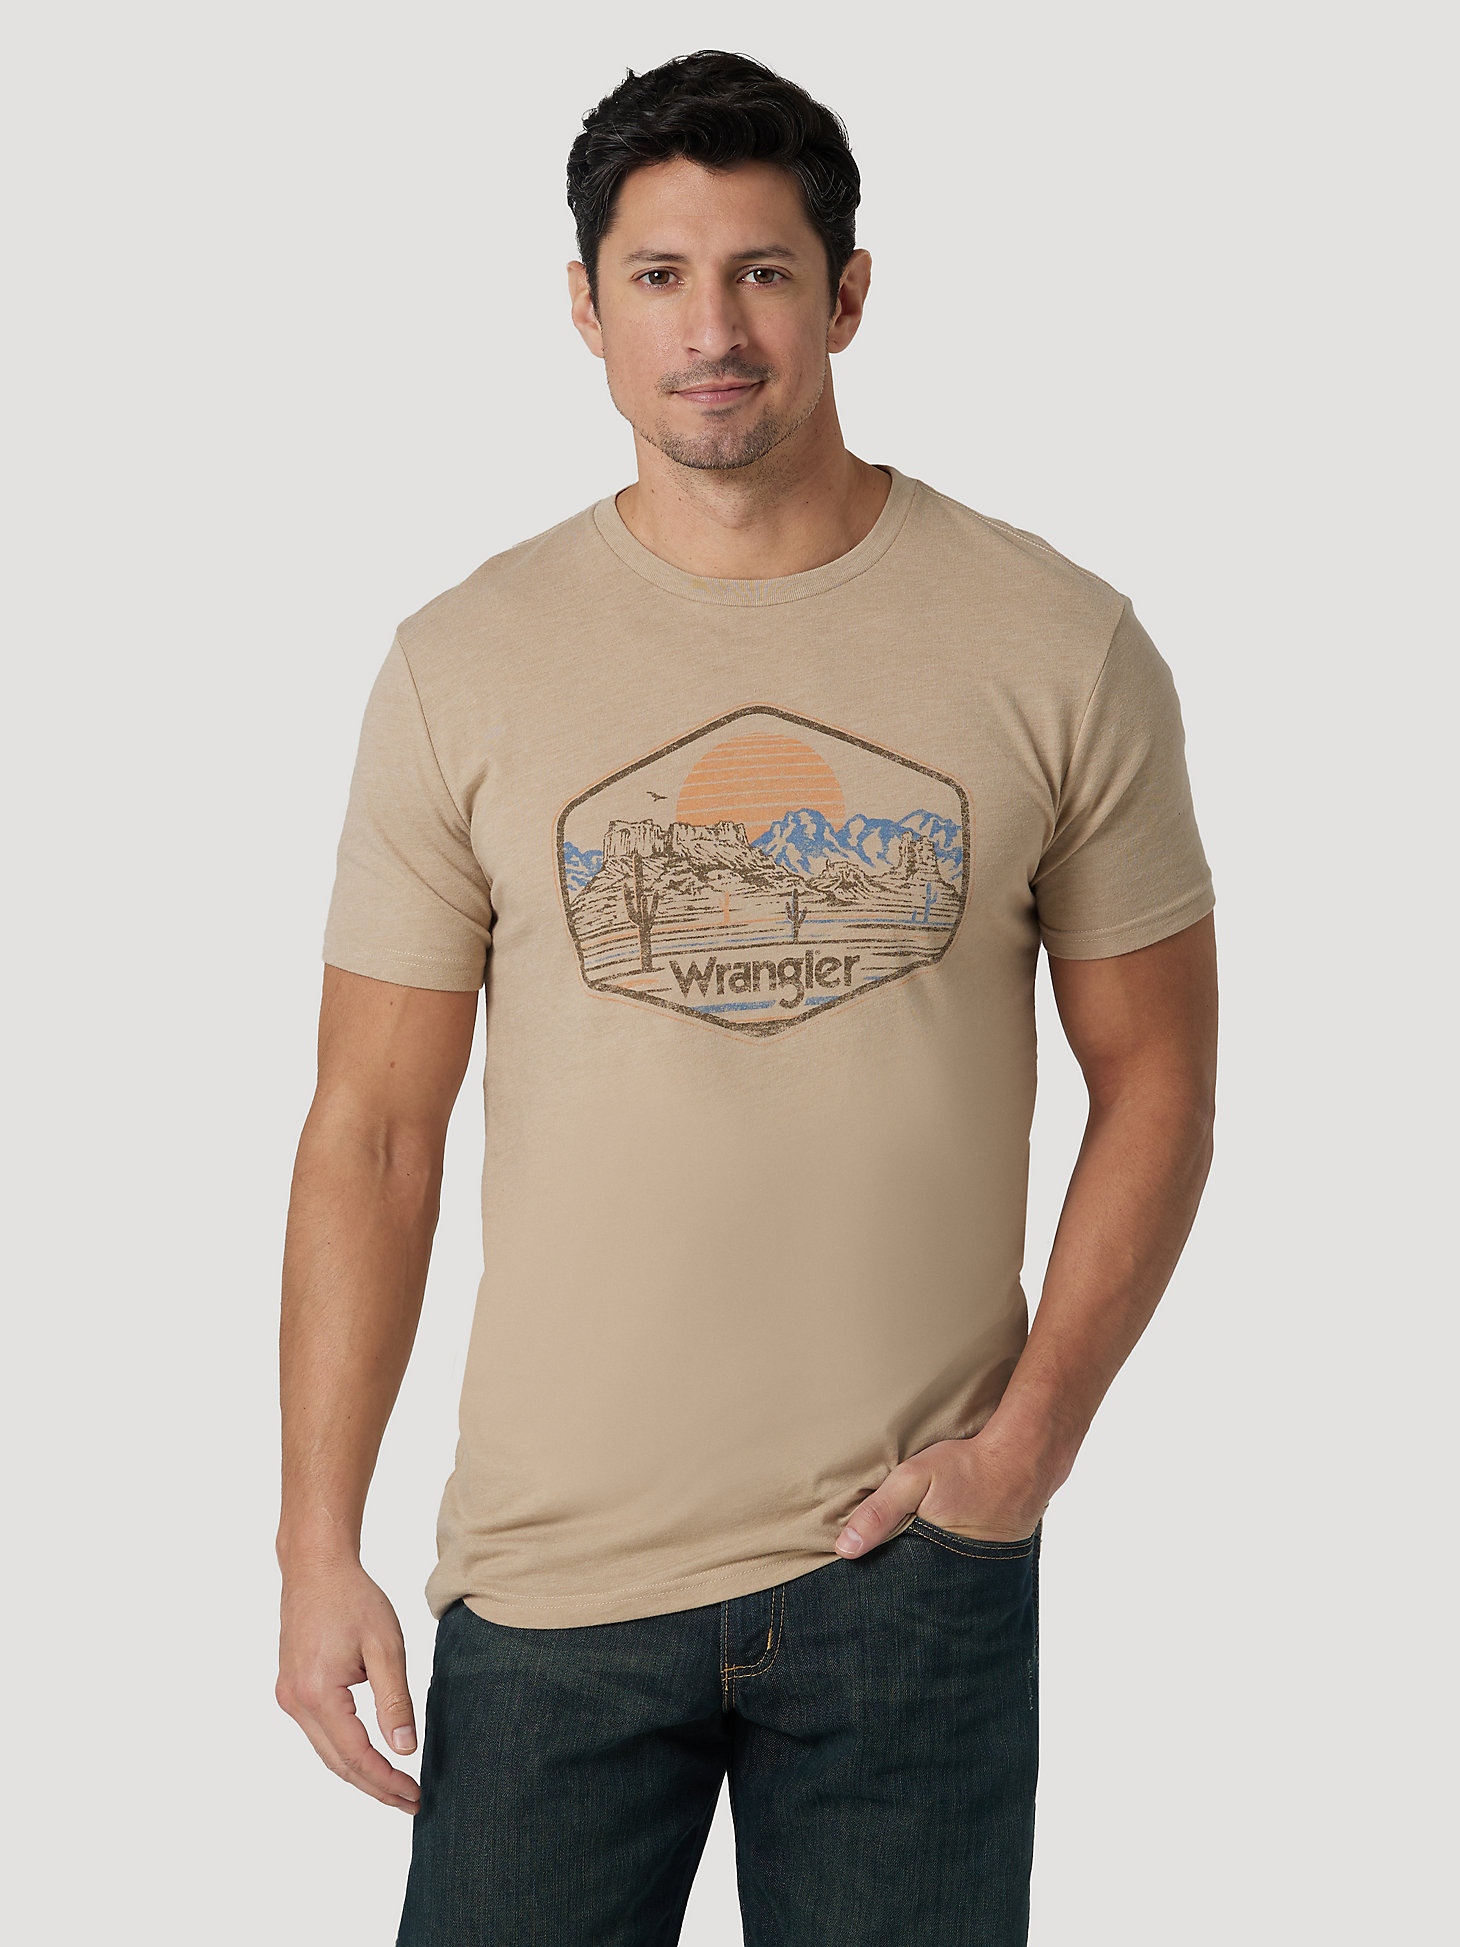 Men's Desert Landscape T-Shirt in Trenchcoat main view